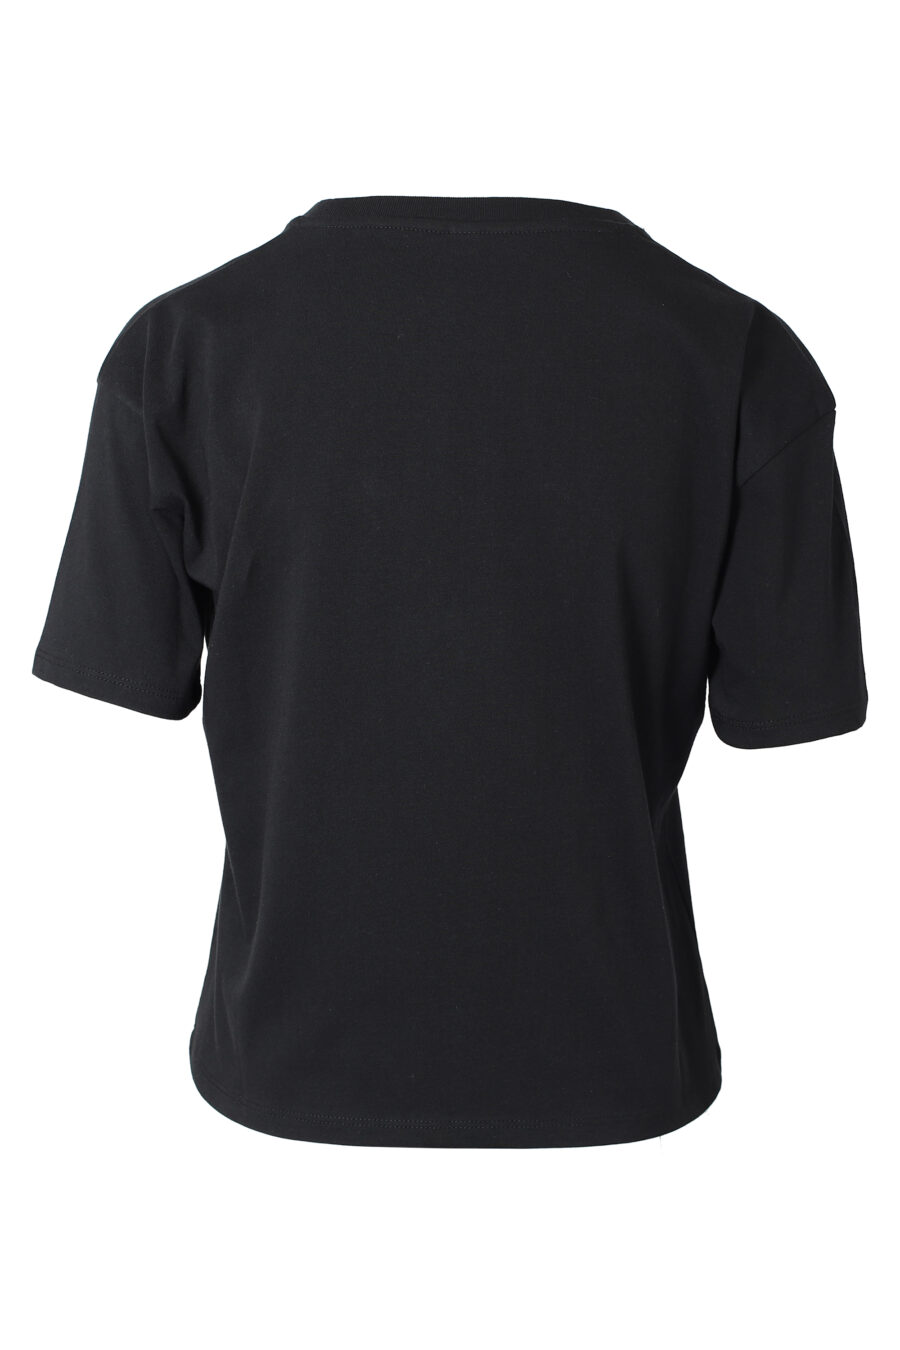 T-shirt noir avec logo mini imprimé animal - IMG 9803